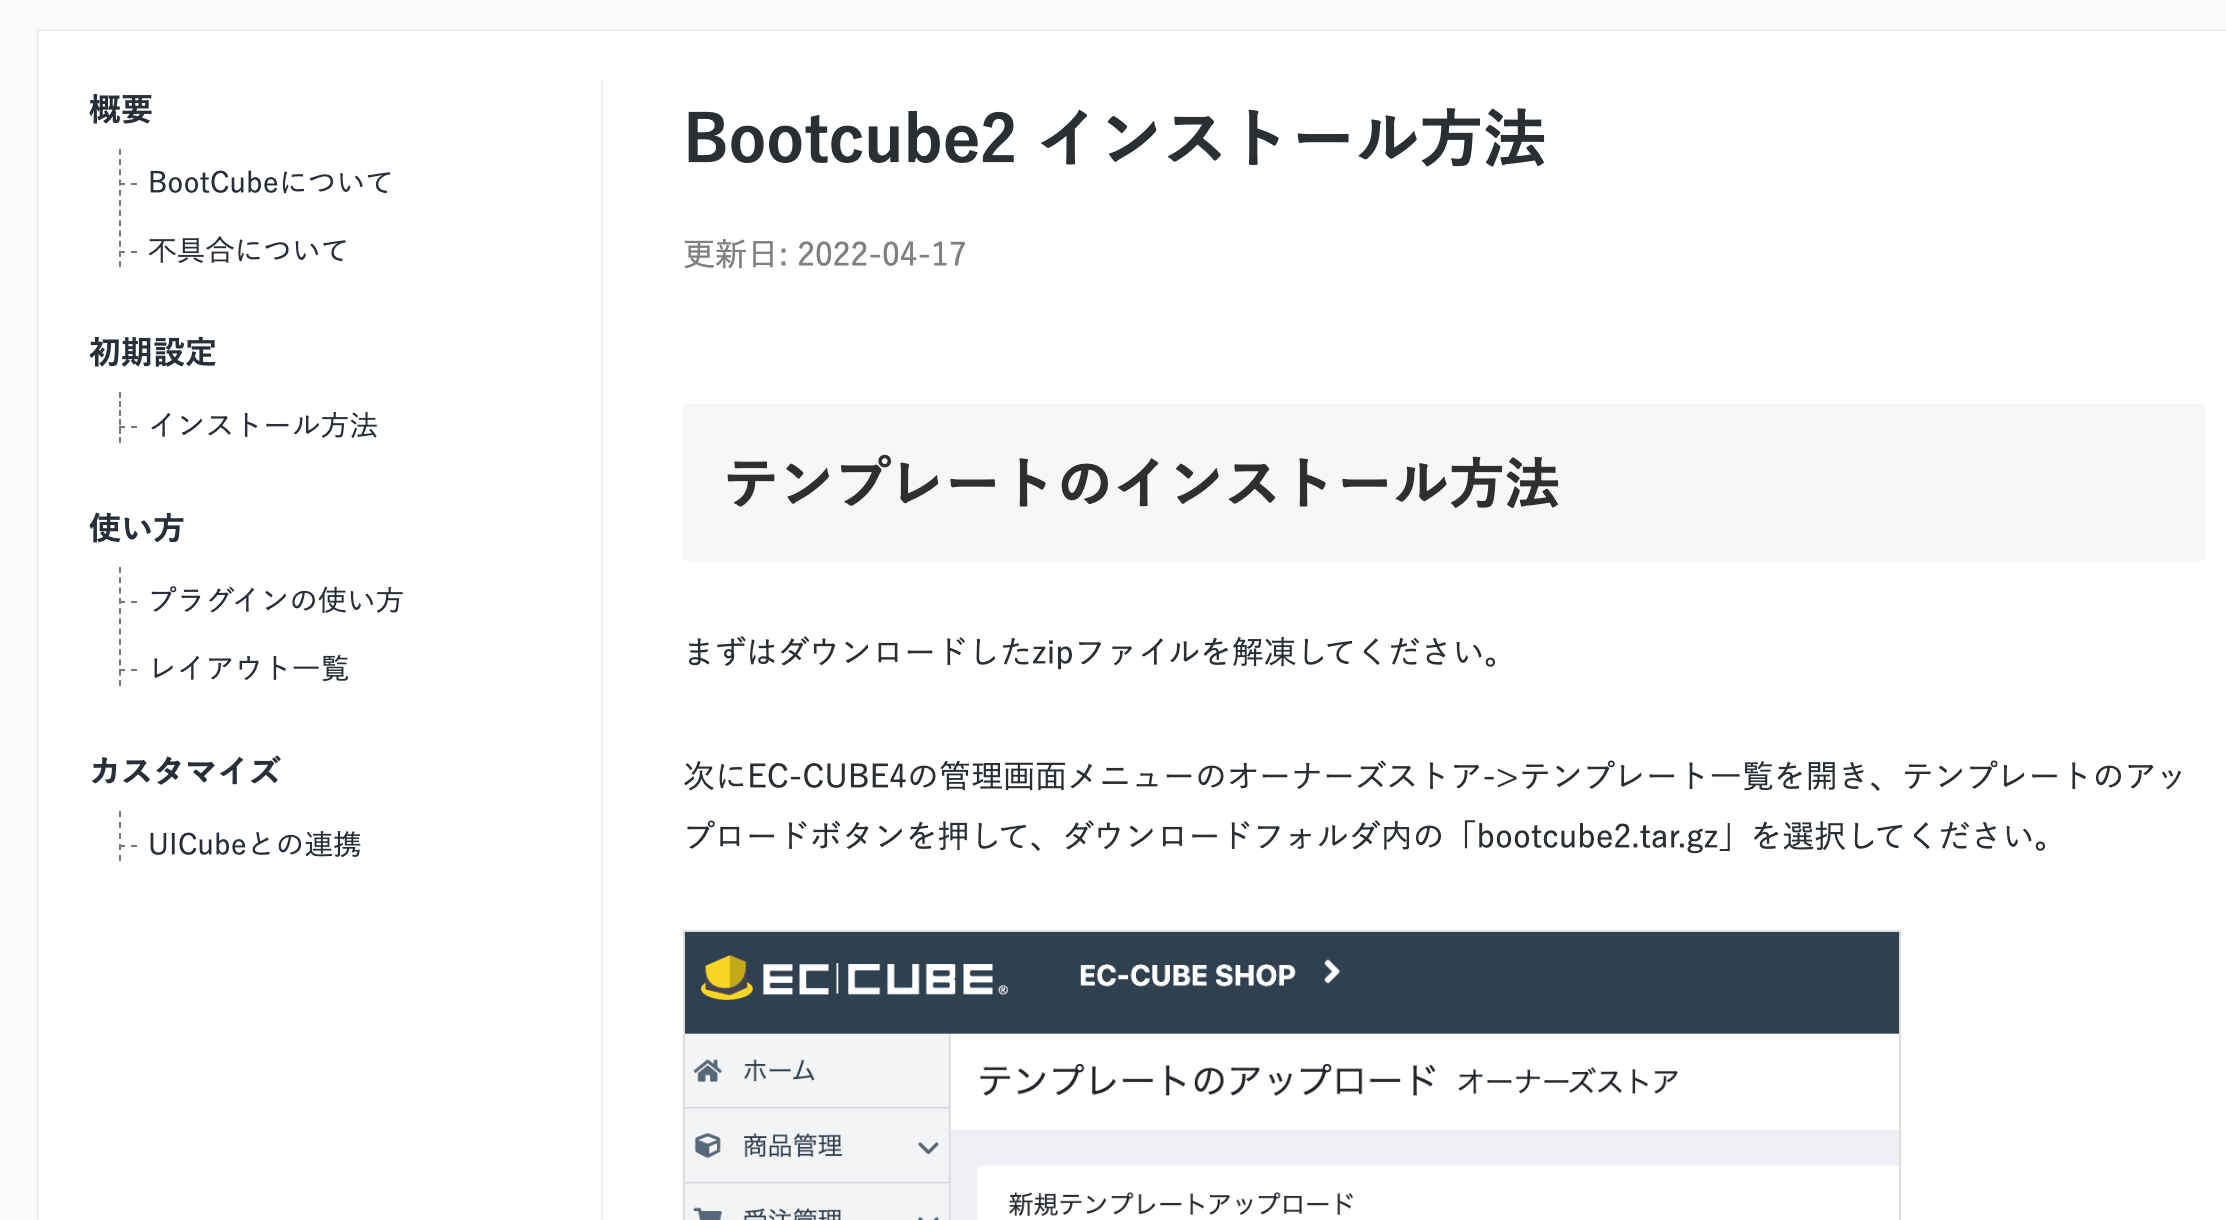 Bootcube2の特徴 UICubeと連携で新着商品、カテゴリ別ランキングなどを作成可能